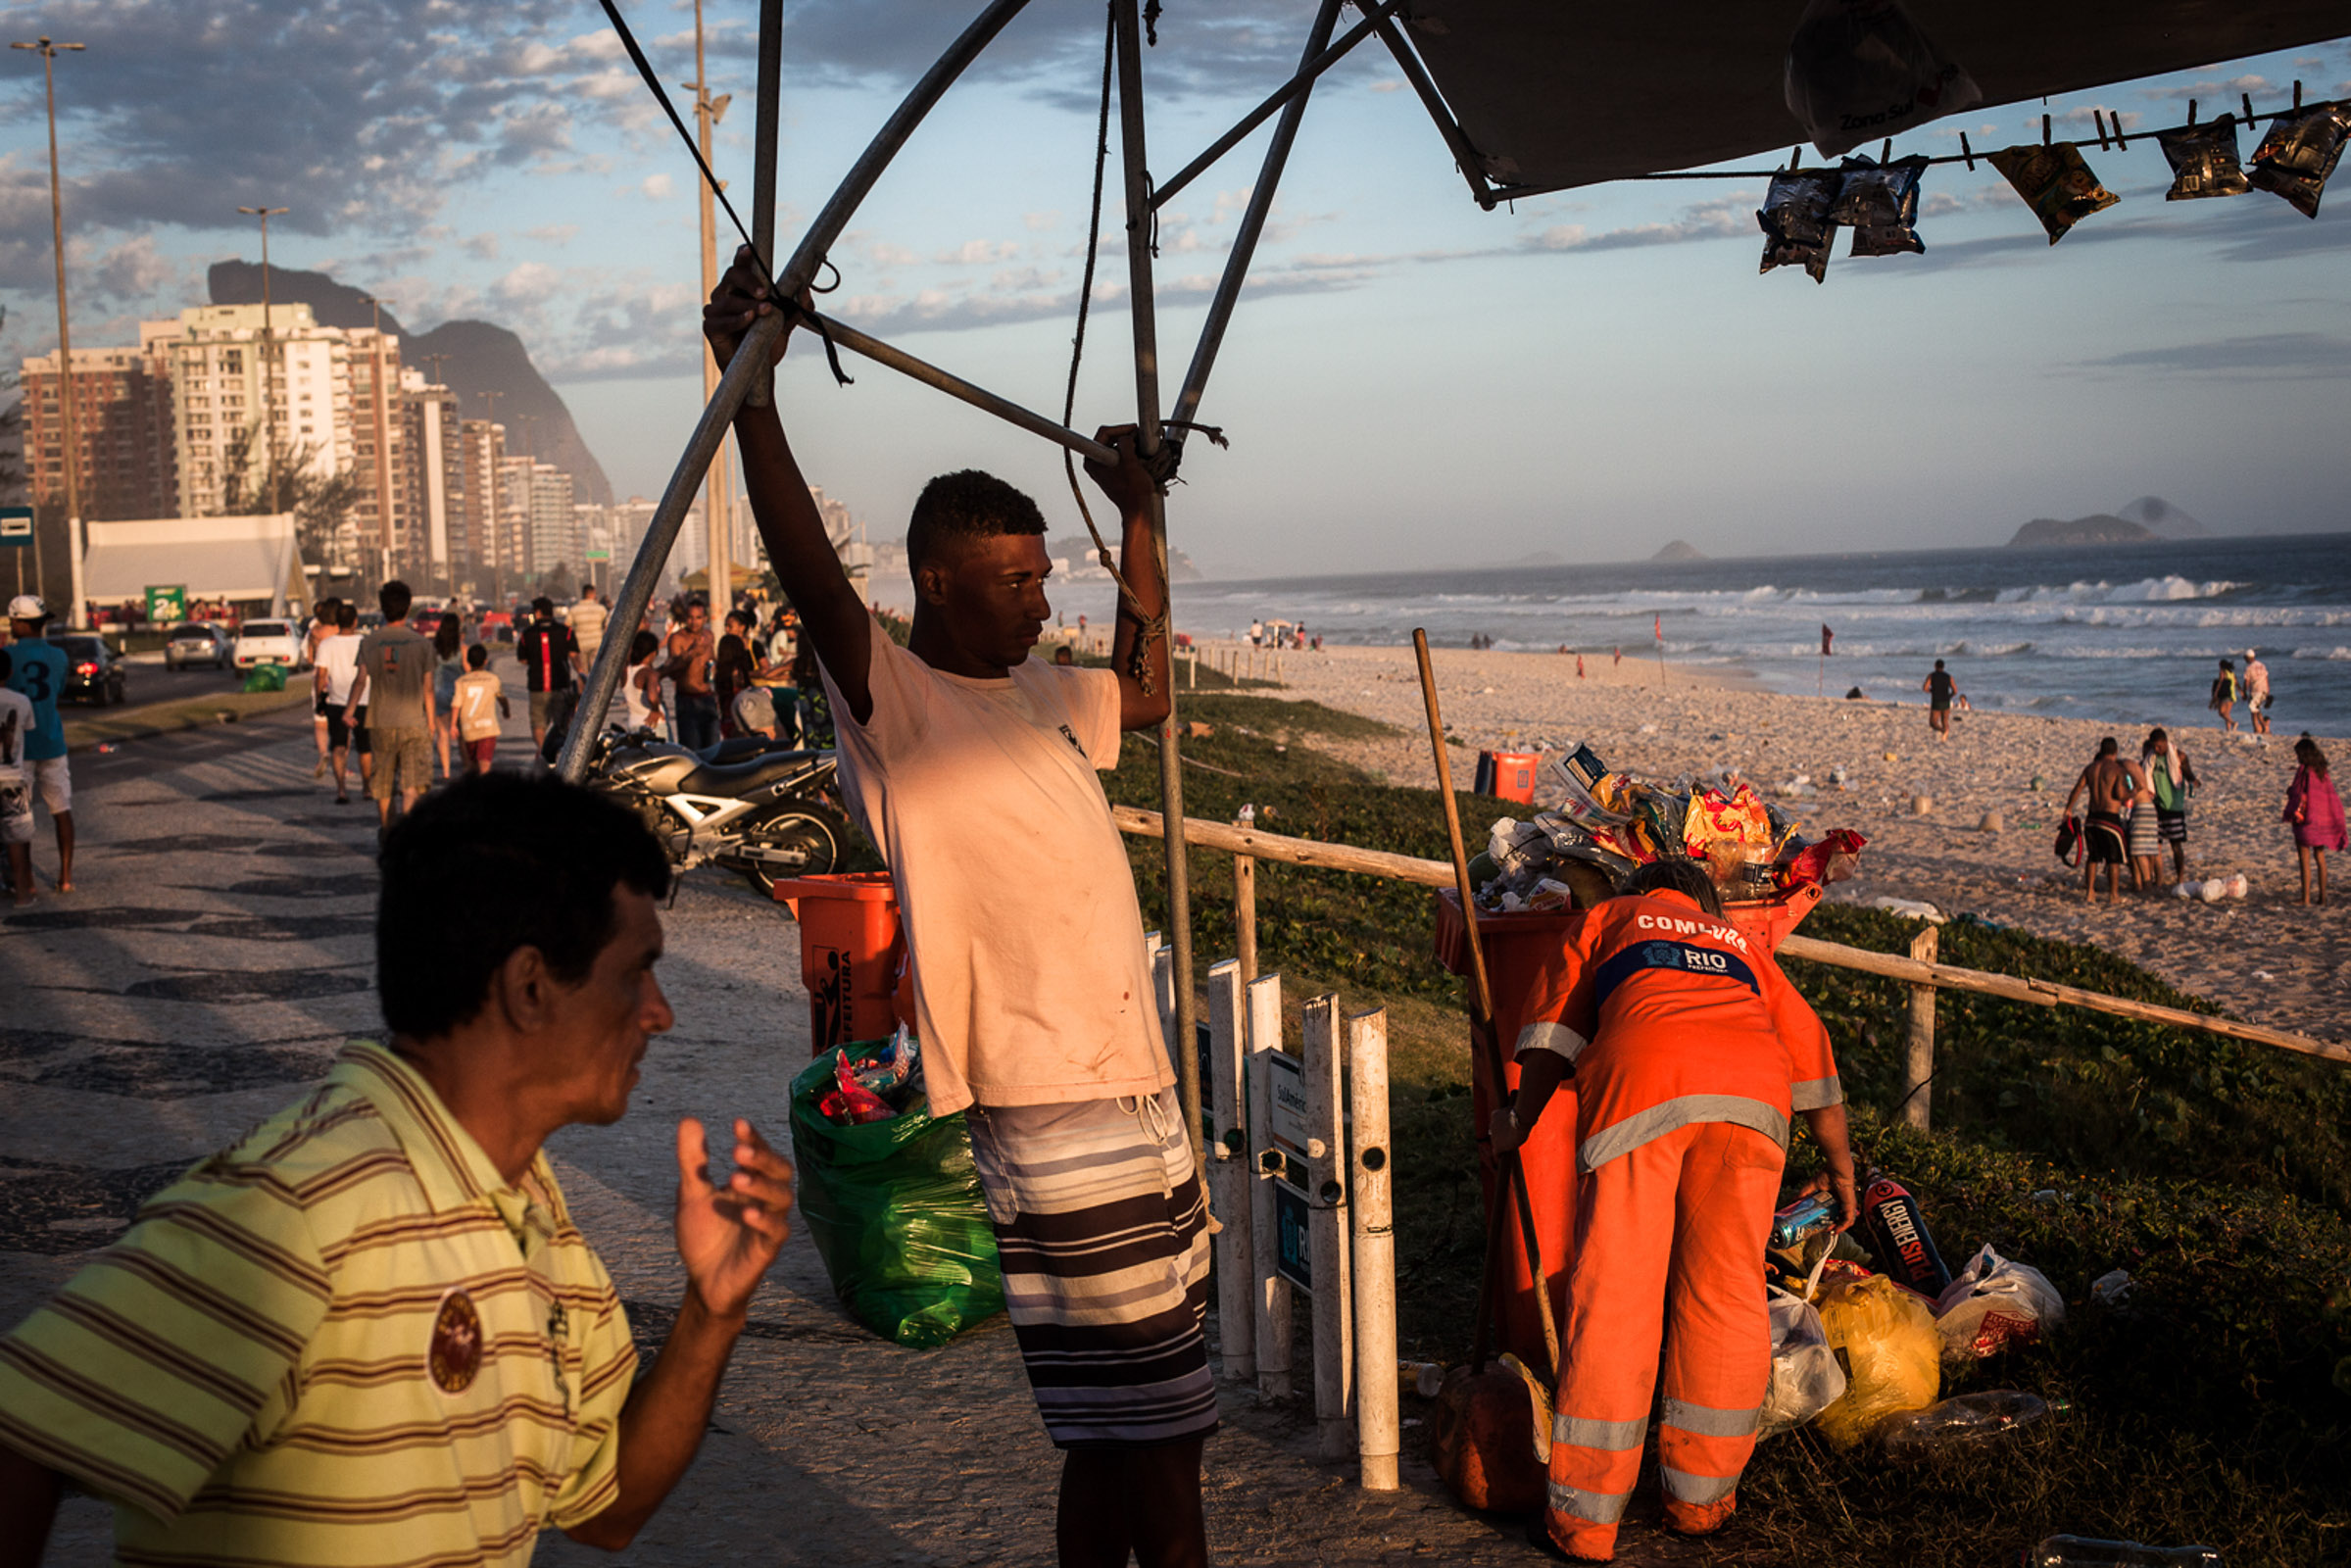 Rio de Janeiro, le 15 Novembre 2013. Fin de journée sur la plage de Barra da Tijuca. Une femme gari commence le nettoyage de la plage.

Rio de Janeiro, November 15, 2013. End of the day on the beach in Barra da Tijuca. A Gari  woman starts cleaning the beach.